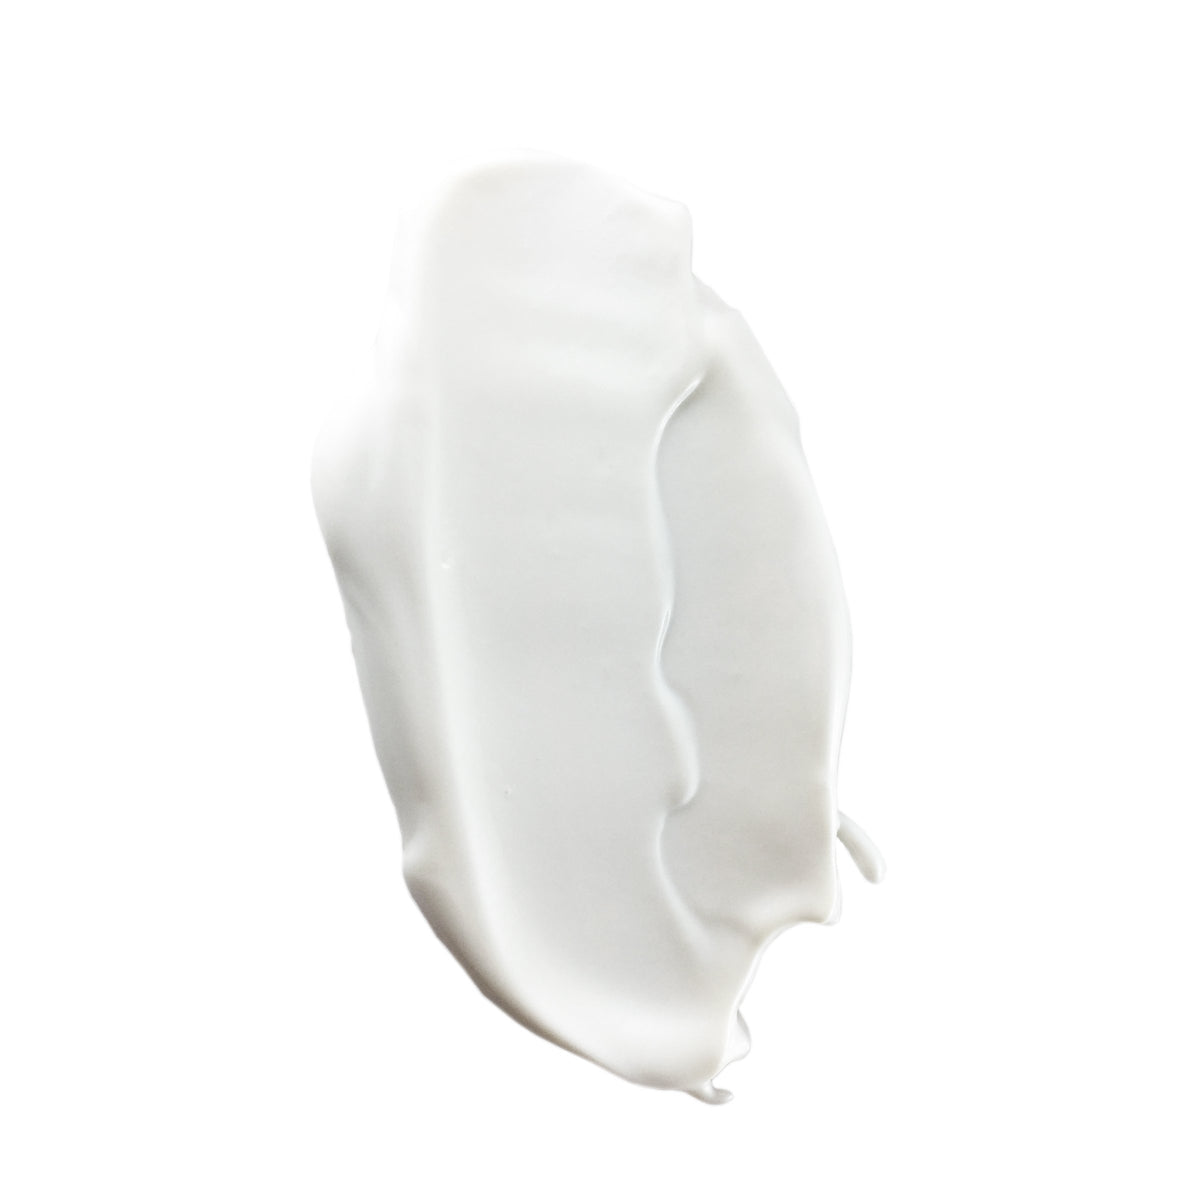 Pot of Shade: Heliotropic SPF 30 white creamy texture.